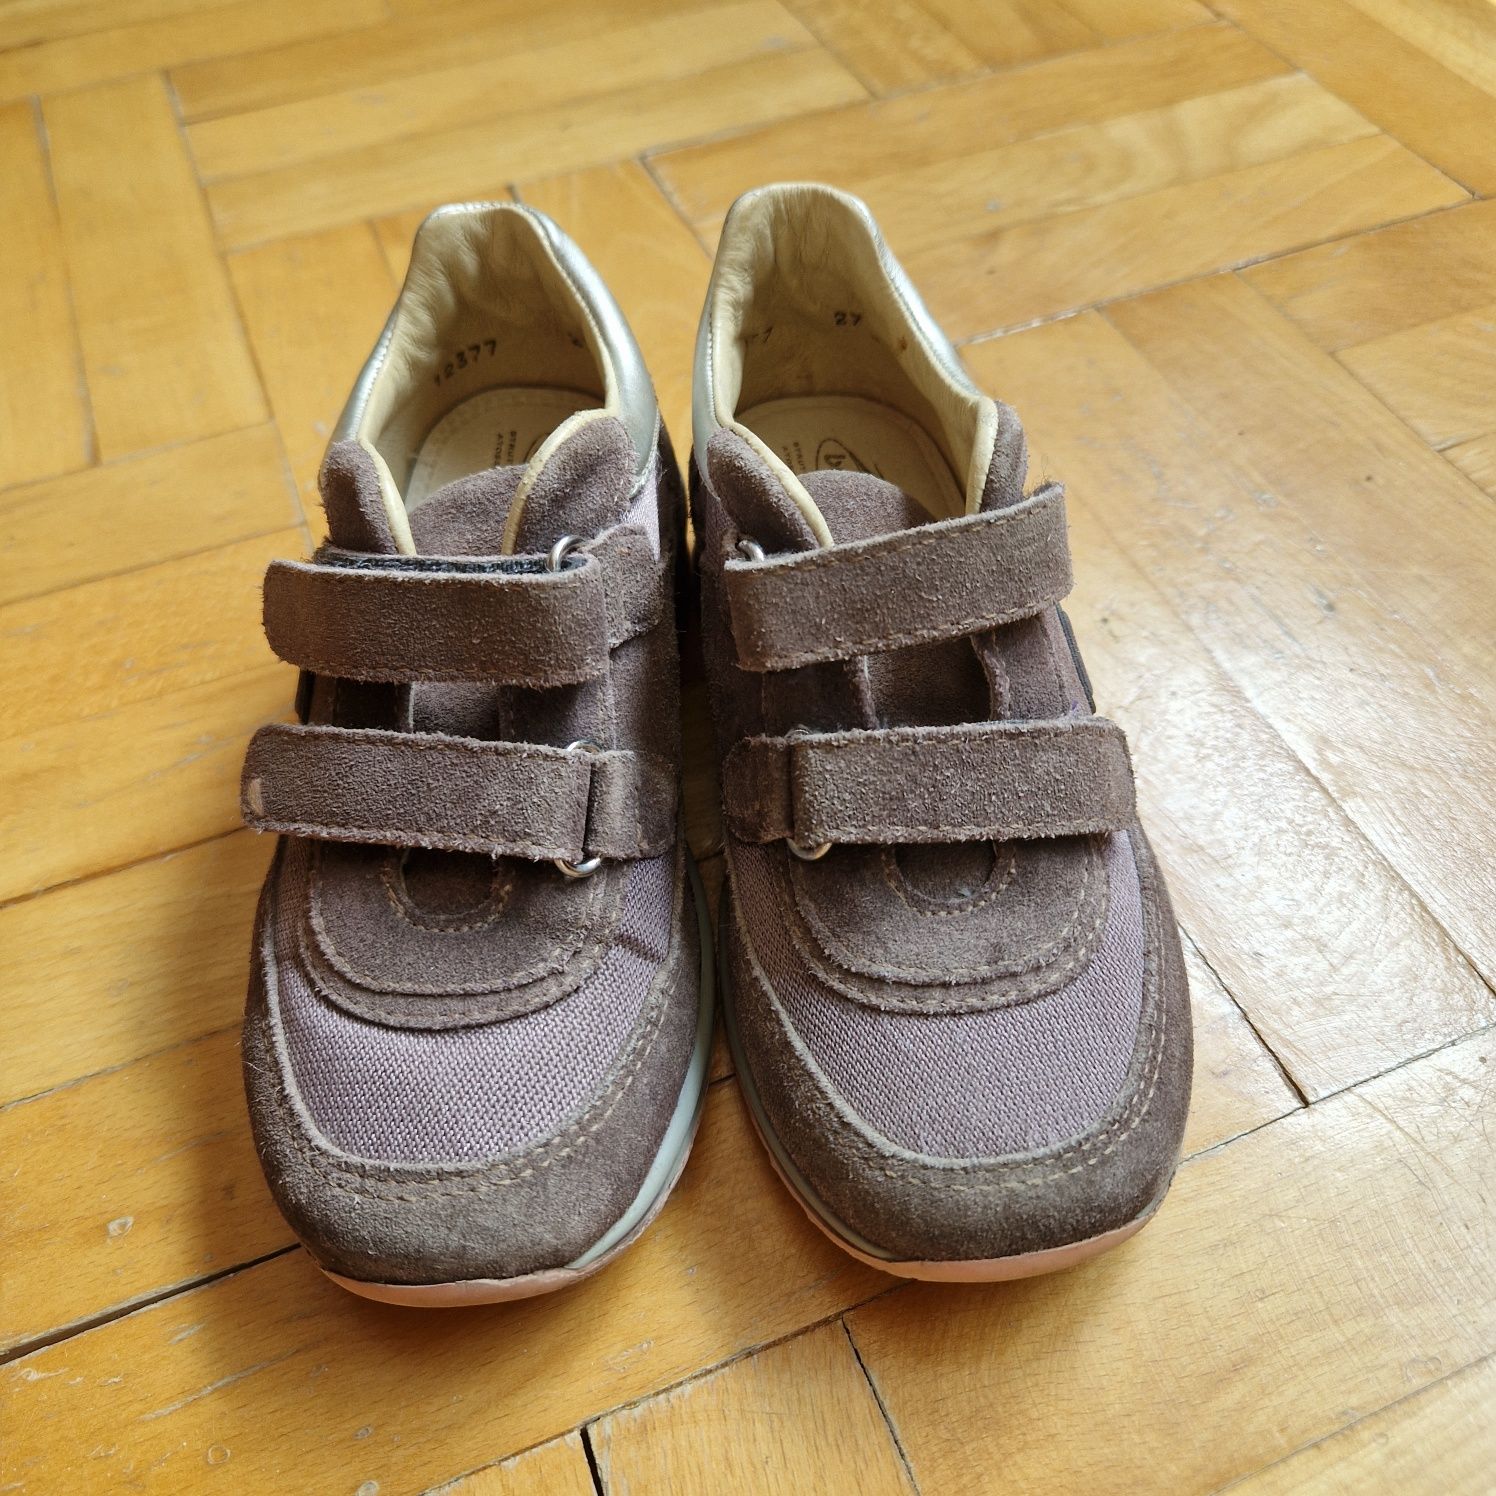 Adidasi pantofi sport copii, Balducci, Italia - 27